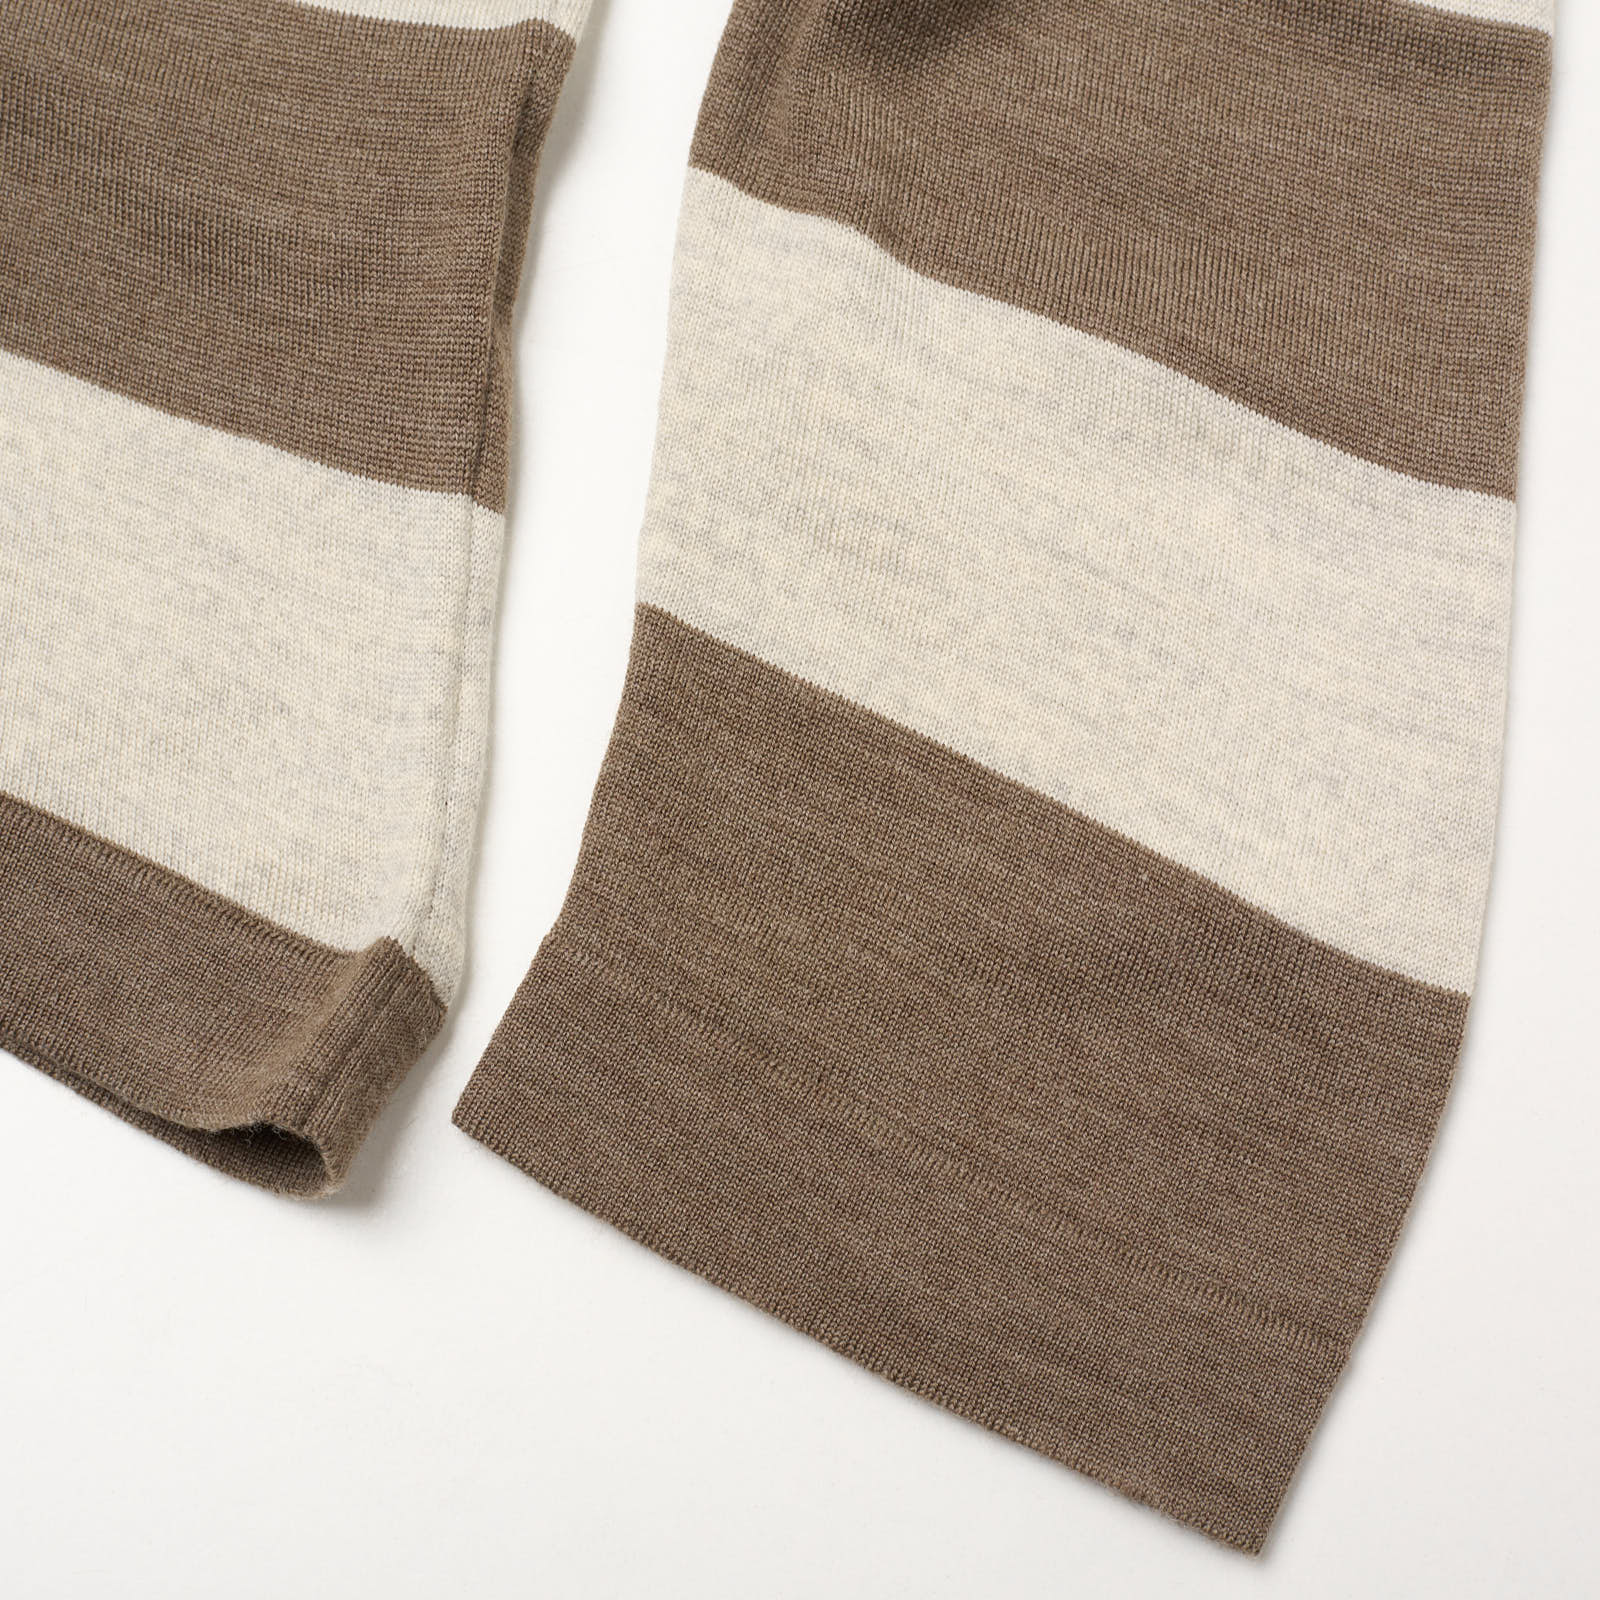 ONES Brown-Gray Striped Loro Piana Wool Super 150's Knit Crewneck Sweater EU 50 NEW US M